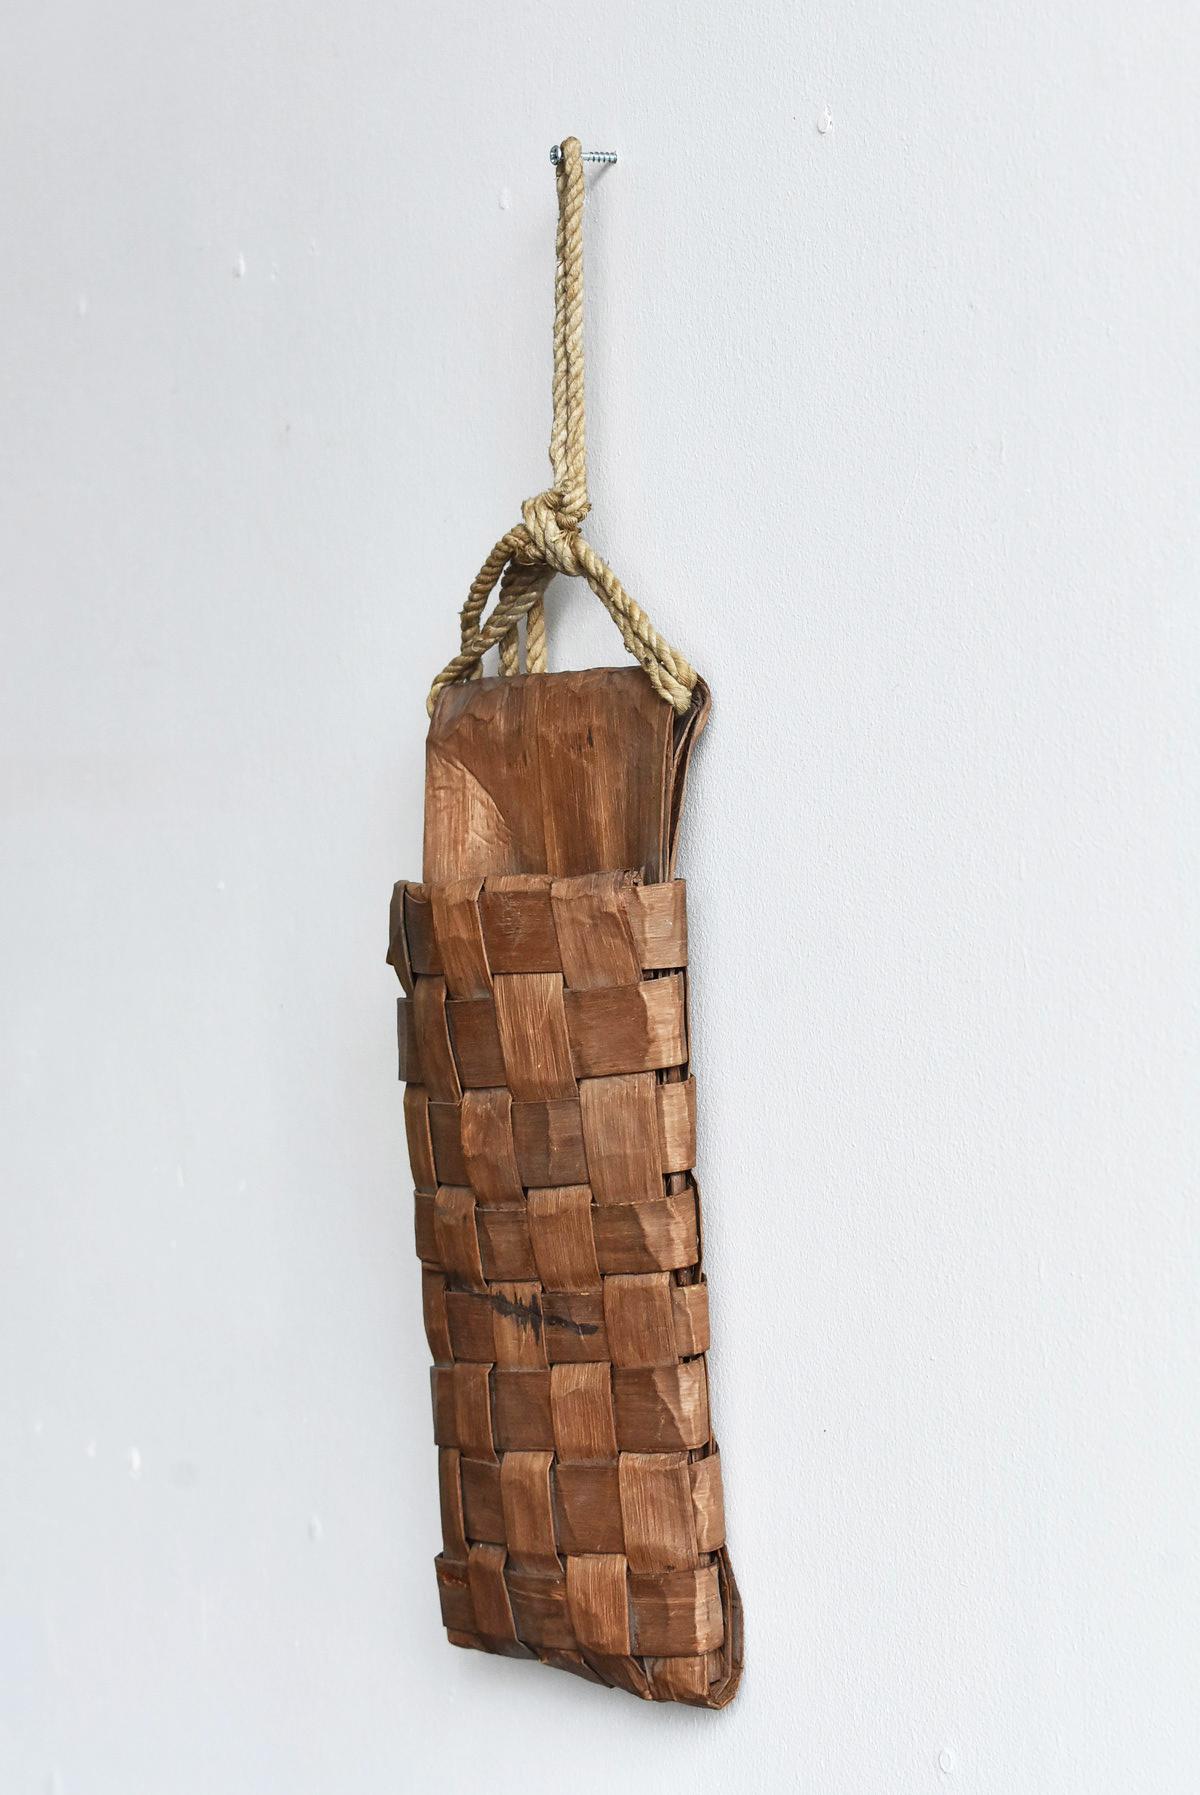 Woven Old Japanese Folk Art / Farmer's Tools Made of Bark / Wall Hangings Vase